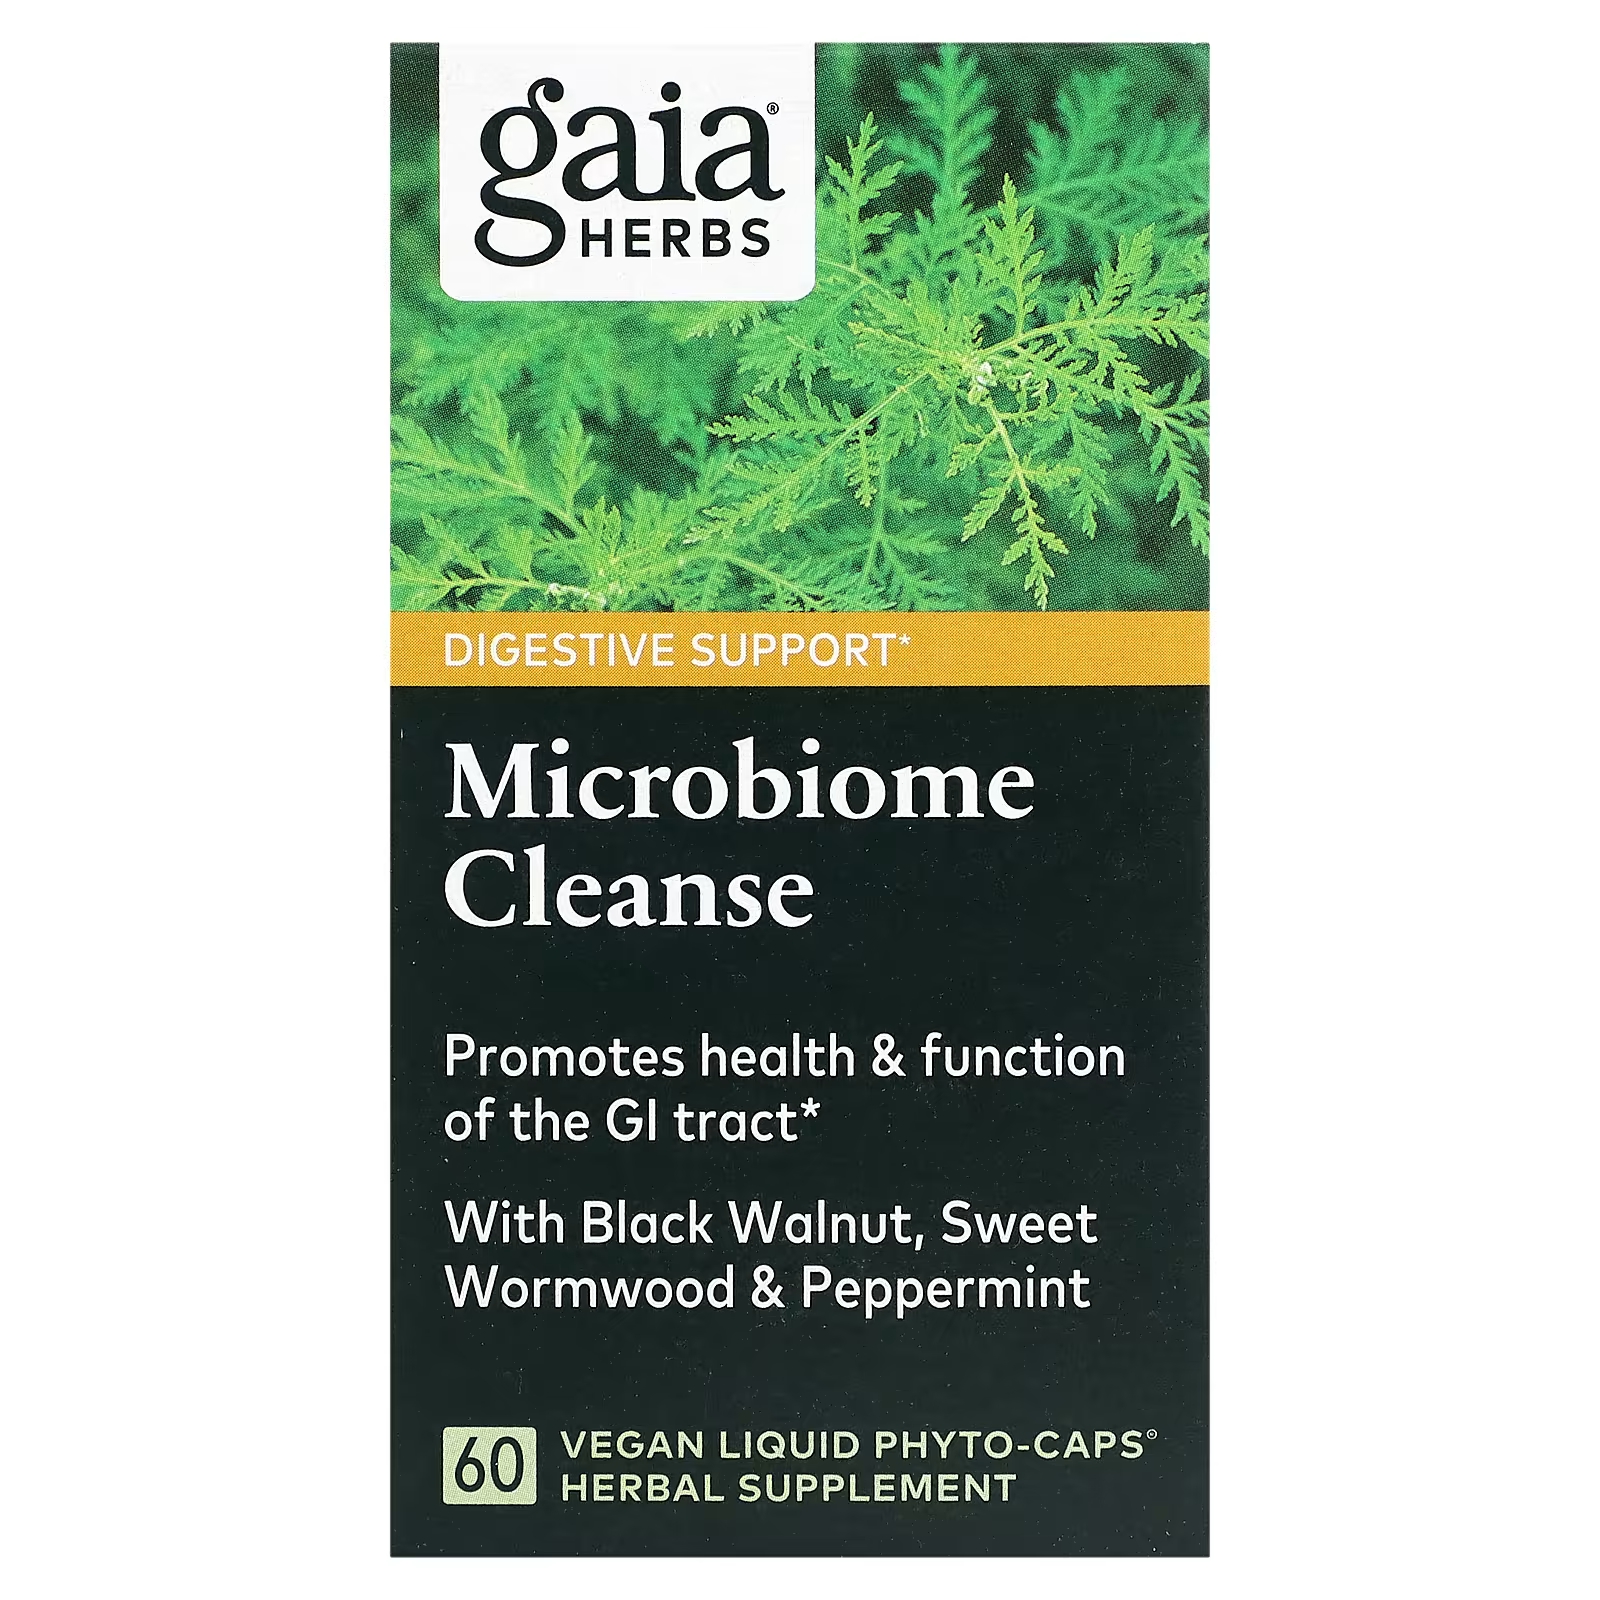 Растительная добавка Gaia Herbs Microbiome Cleanse, 60 жидких фитокапсул растительная добавка gaia herbs sound sleep 60 жидких фитокапсул